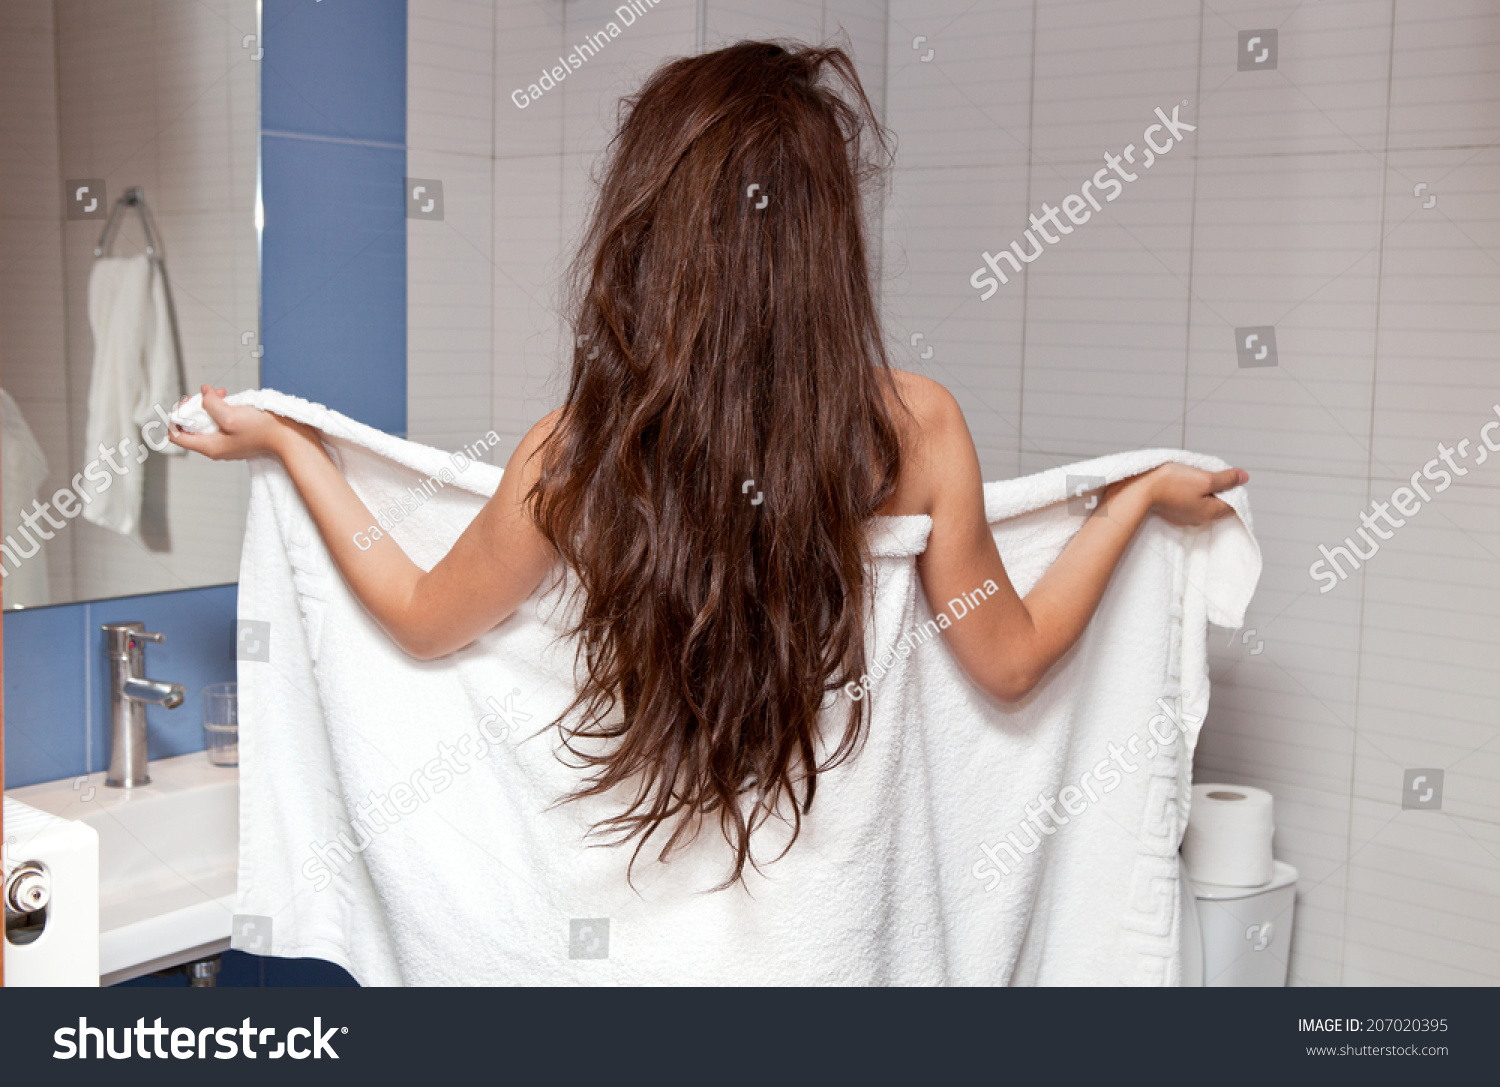 фото девушки в полотенце из душа